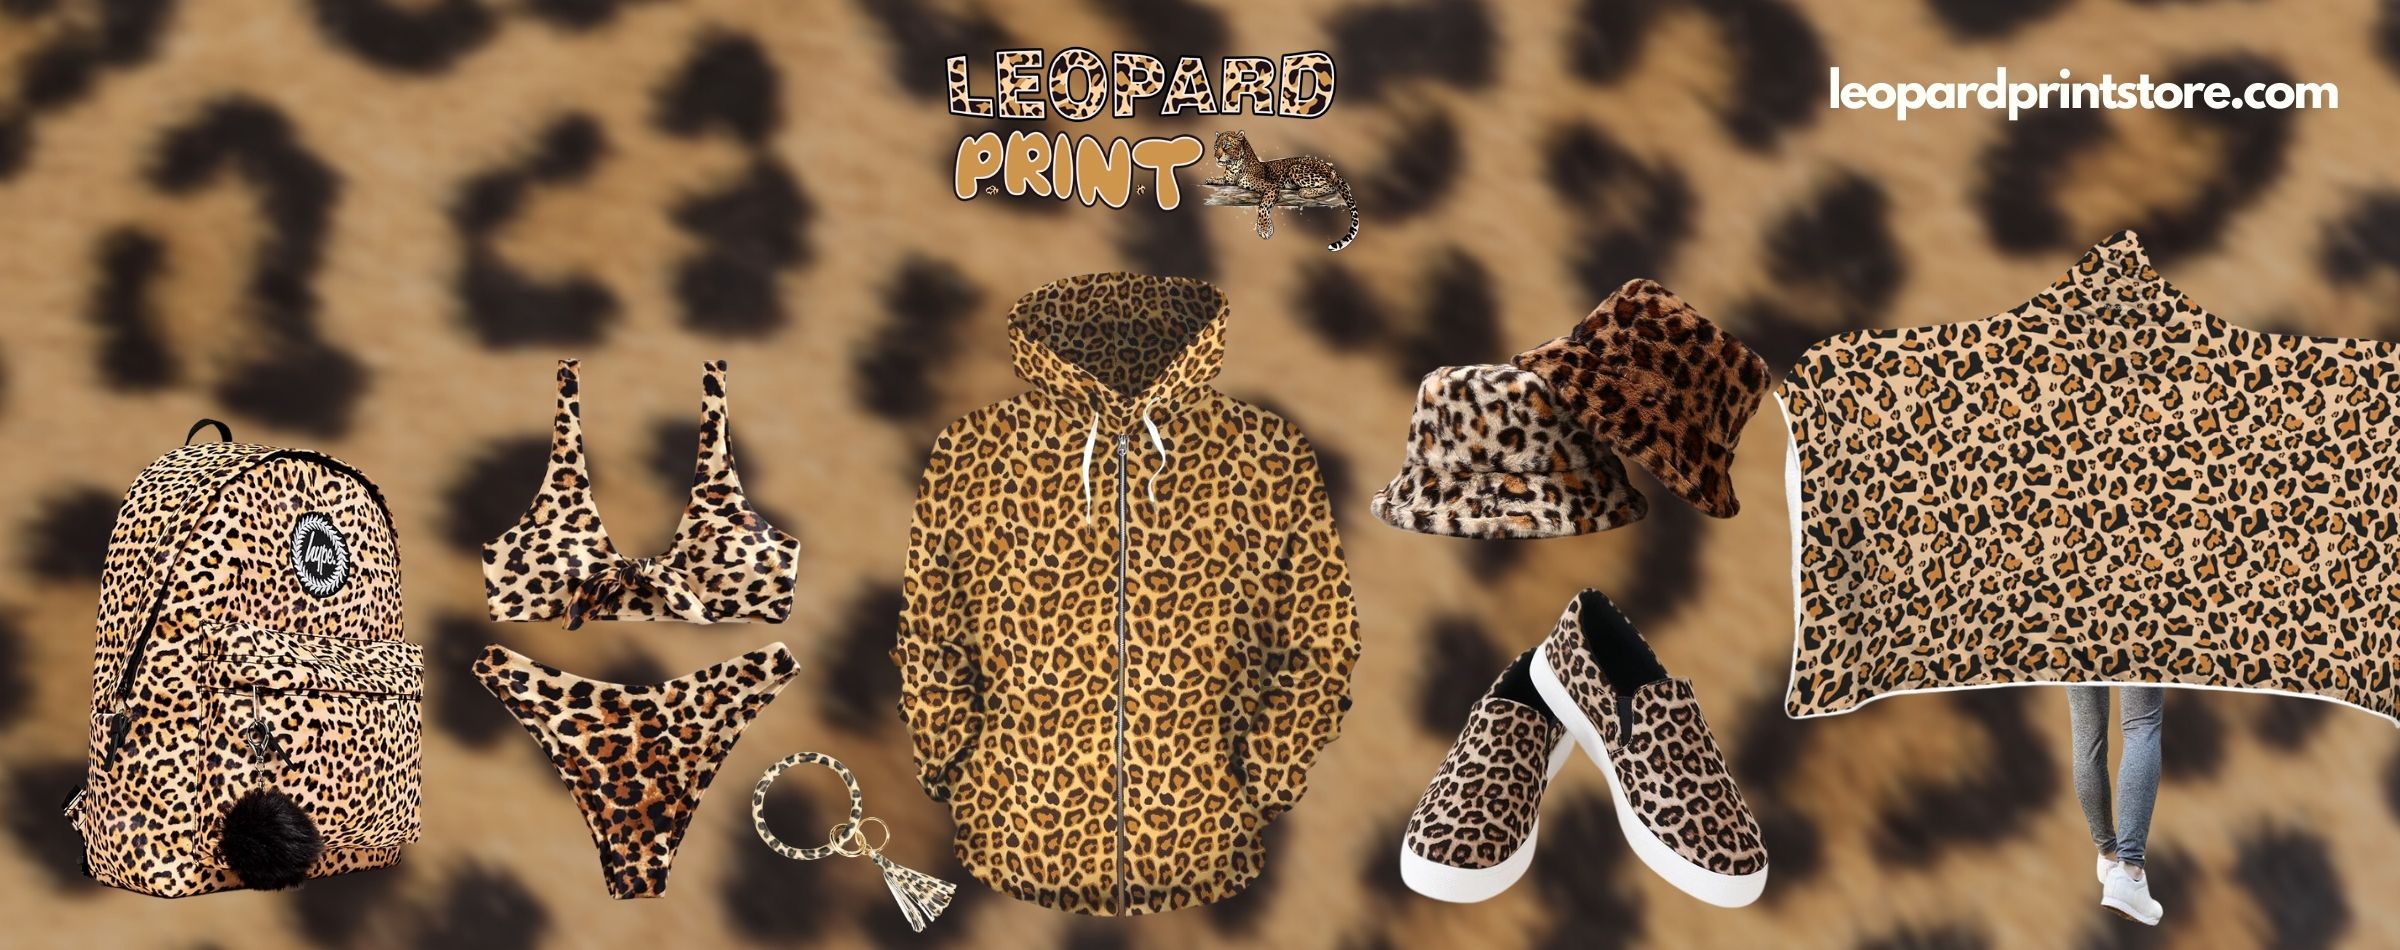 Leopard Print Store Web Banner - Leopard Print Store